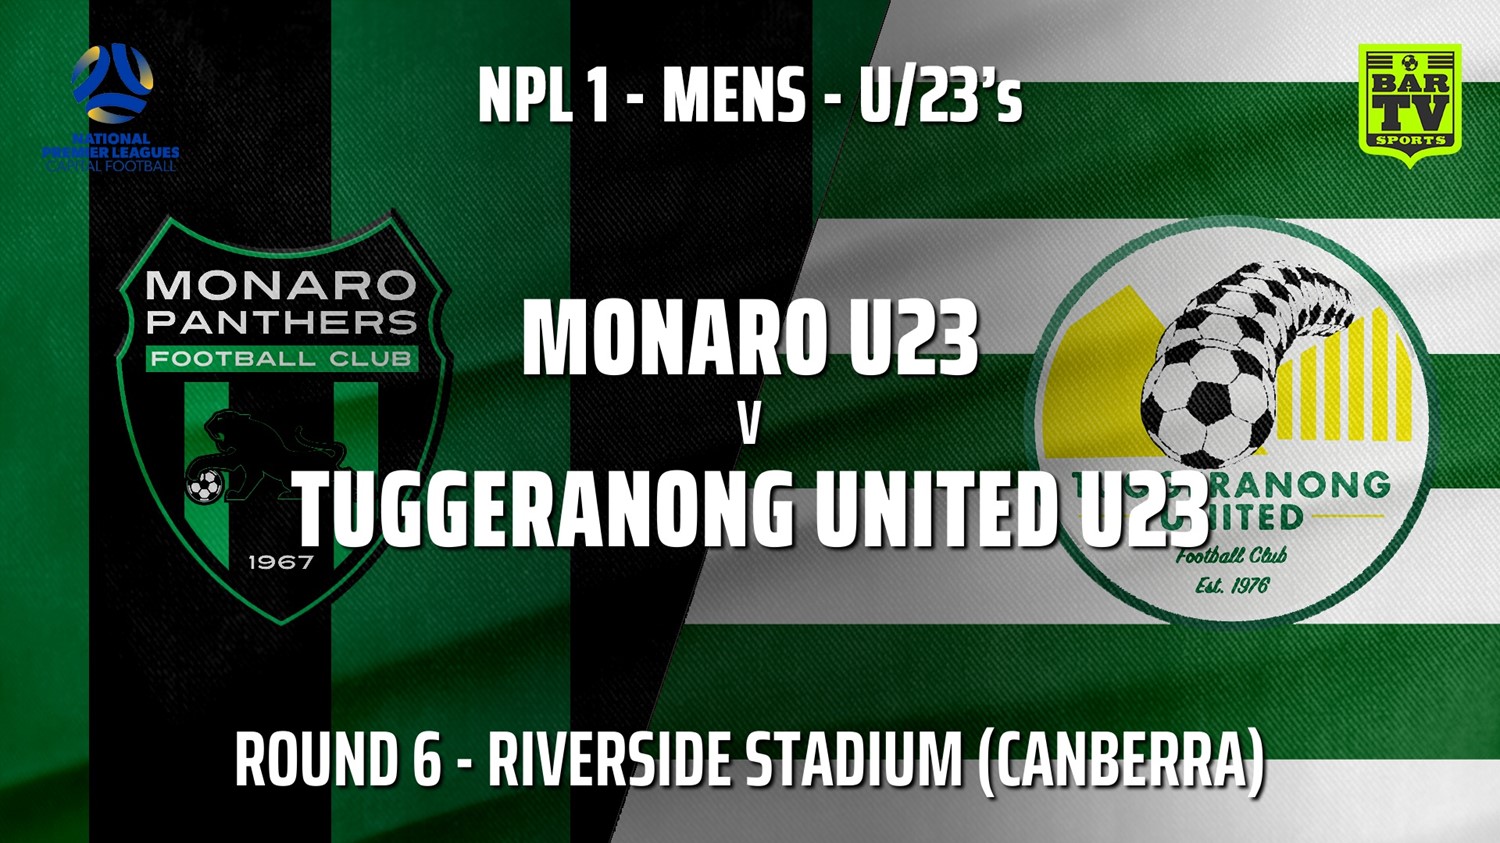 210515-NPL1 U23 Capital Round 6 - Monaro Panthers U23 v Tuggeranong United U23 Minigame Slate Image